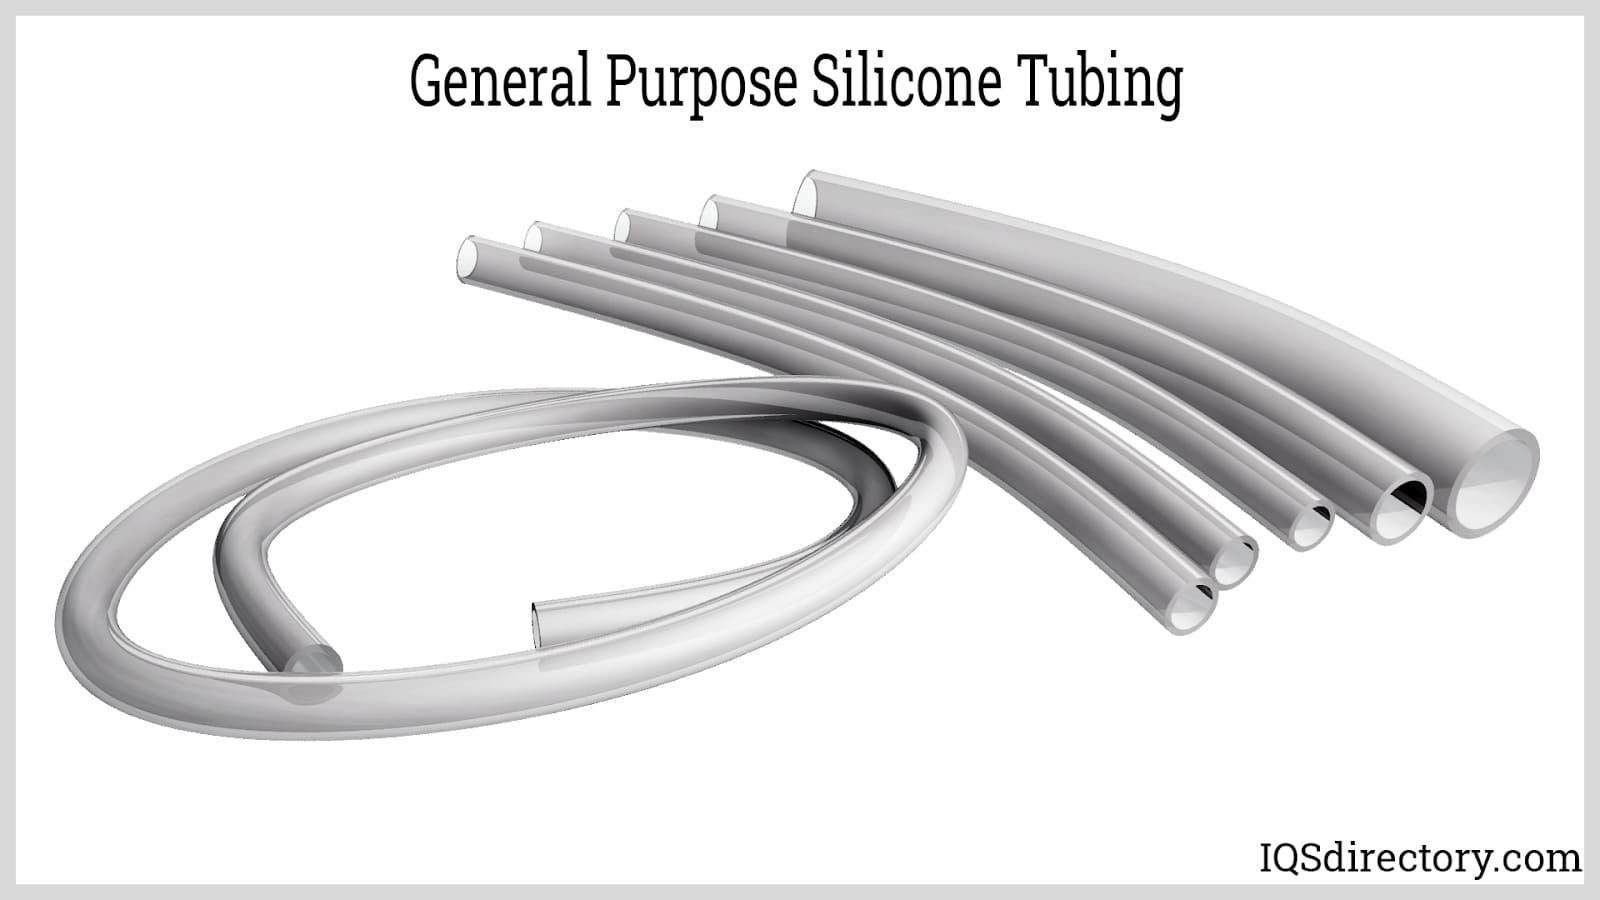 General Purpose Silicone Tubing